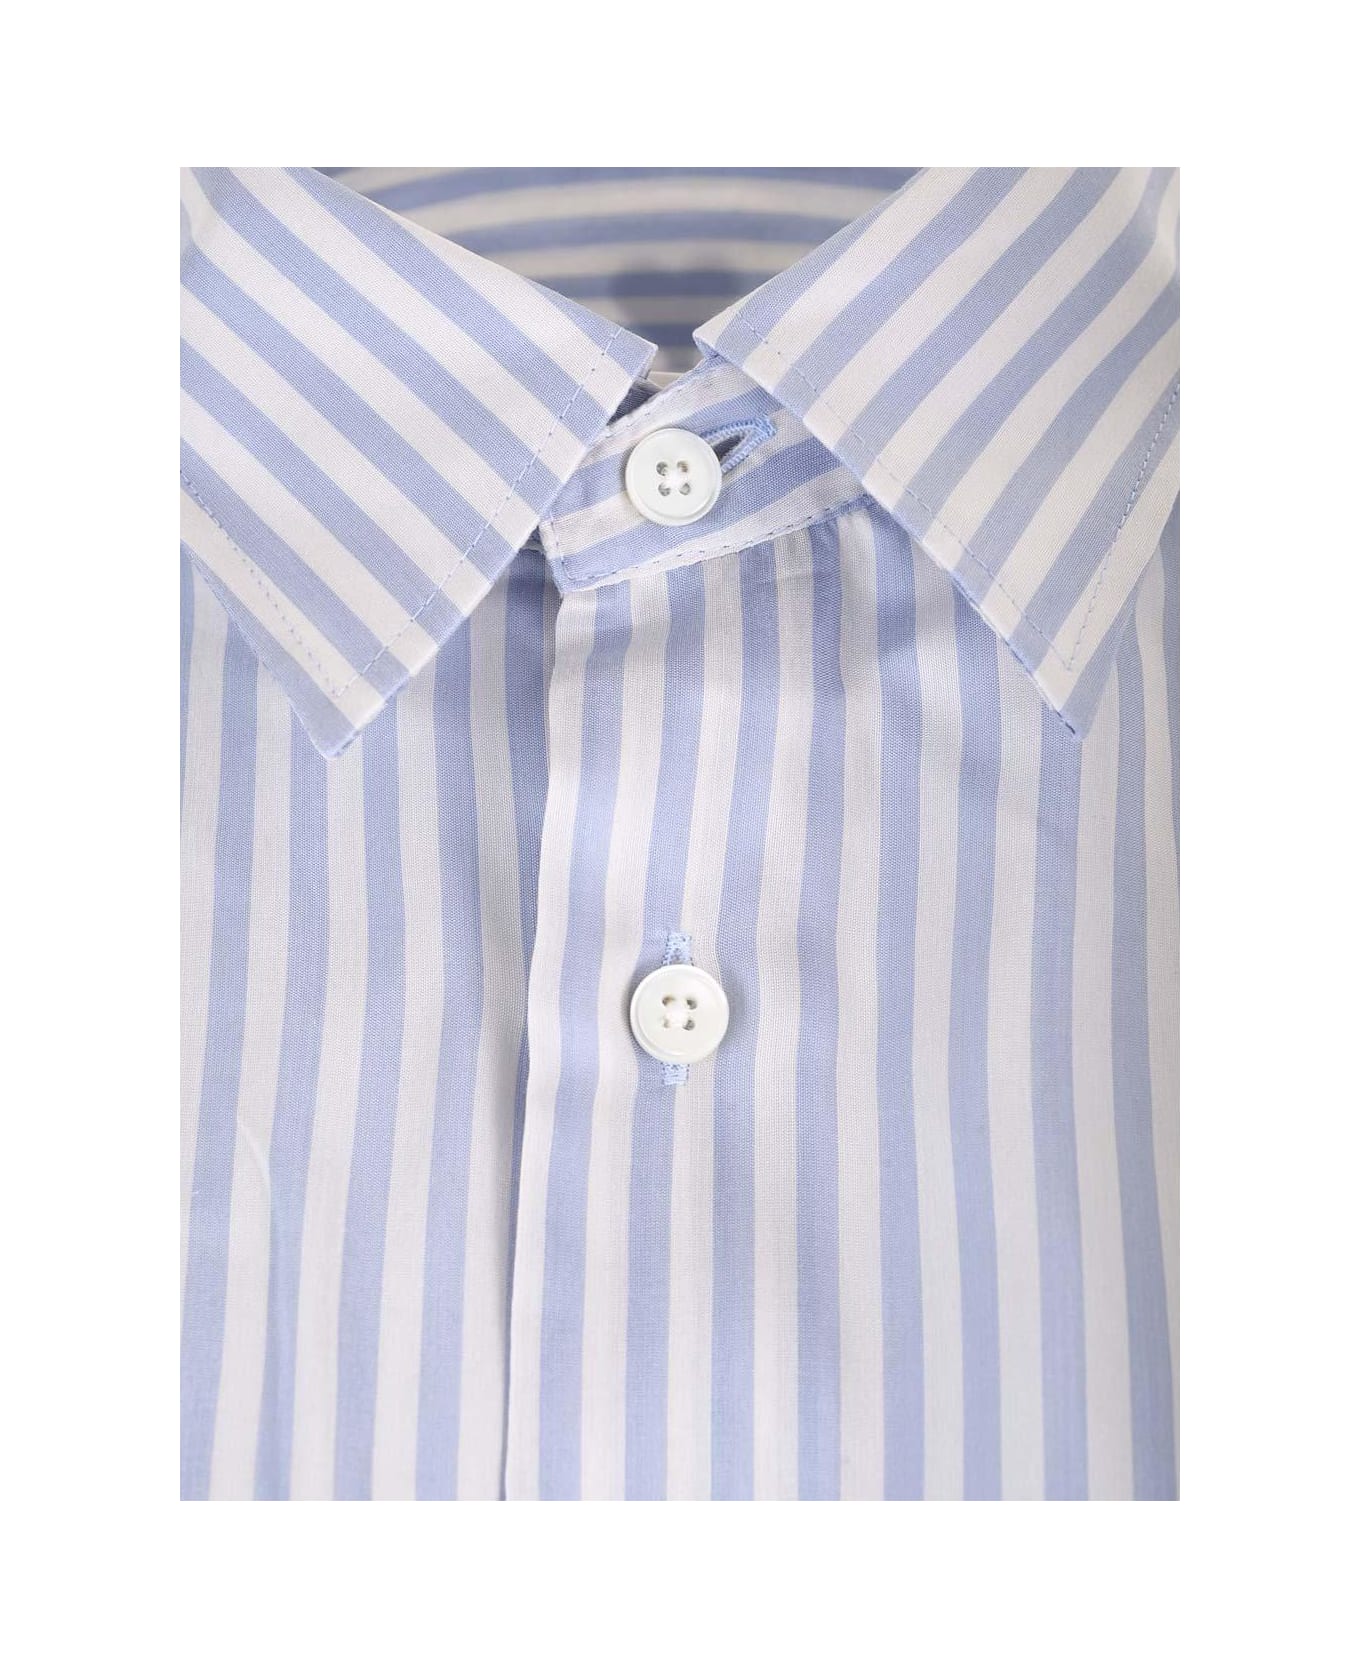 Ami Alexandre Mattiussi Striped Button-up Shirt - BABY BLUE